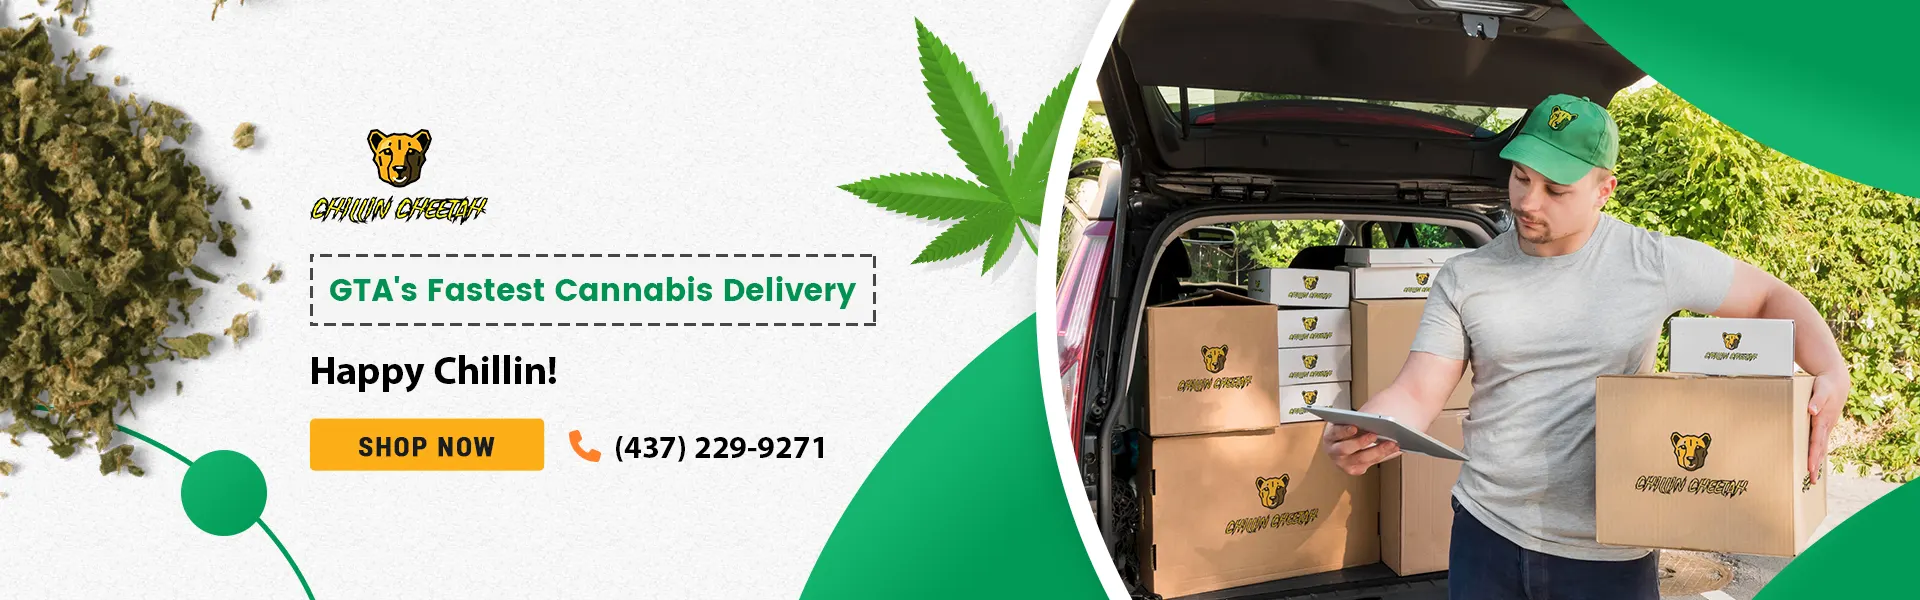 GTA's Fastest Cannabis Delivery Service